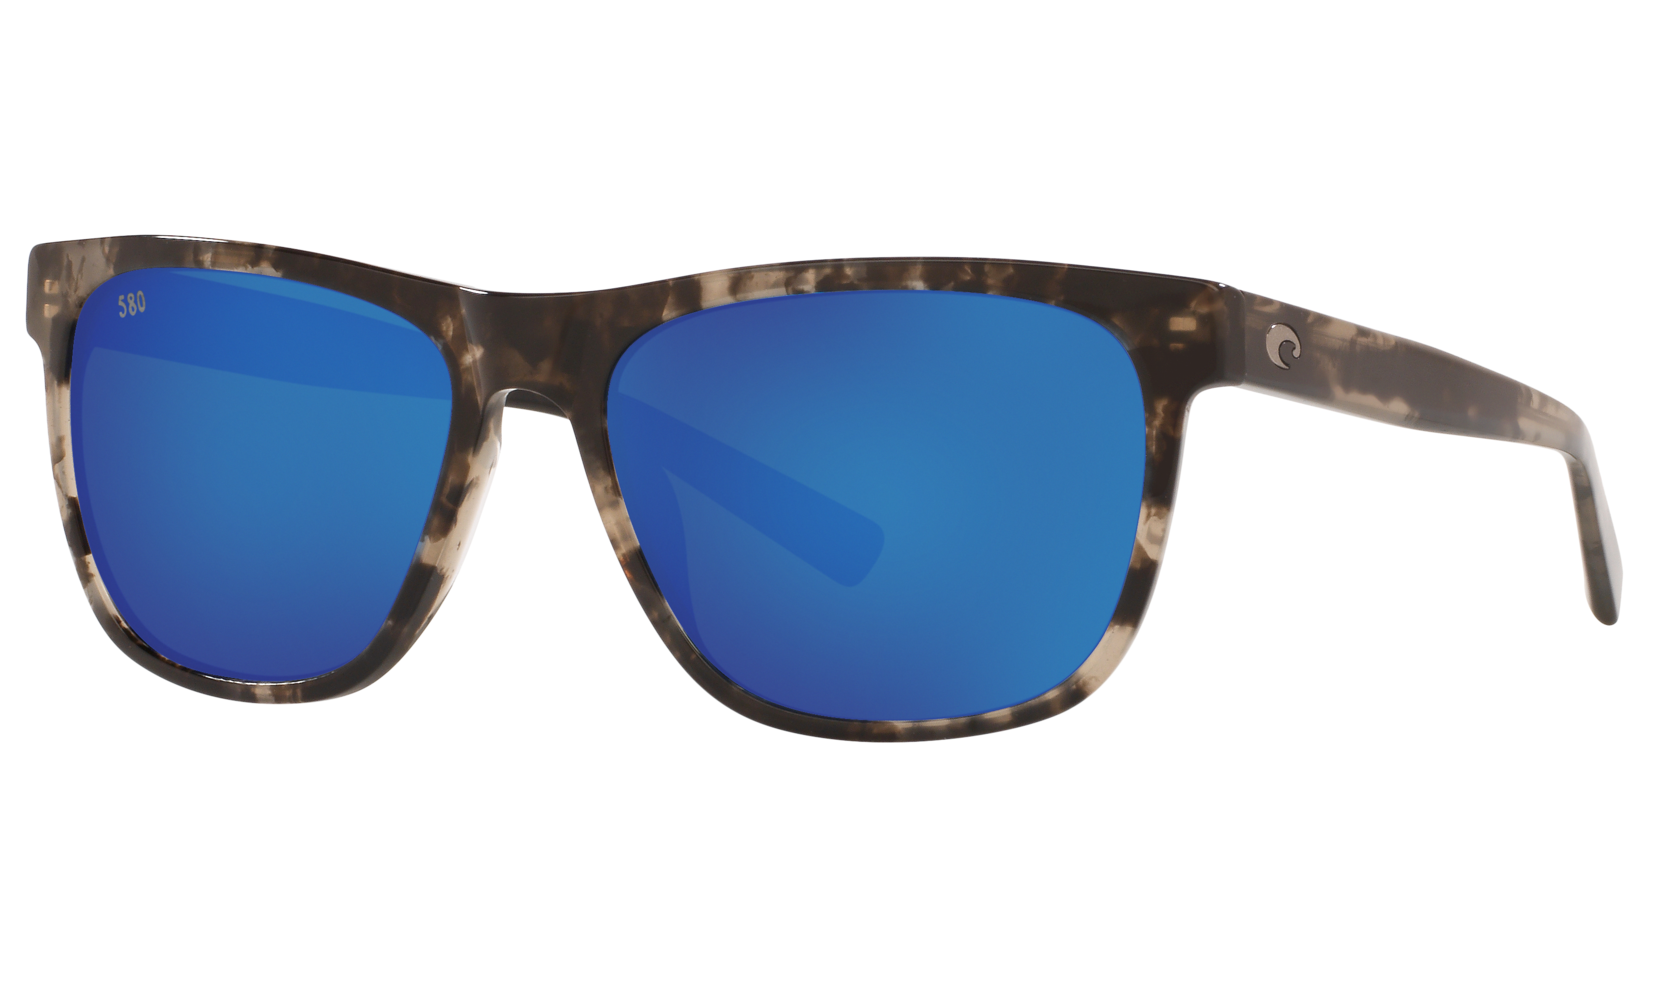 Costa Apalach Shiny Black Kelp Frame Polarised Sunglasses - Blue Mirror 580G